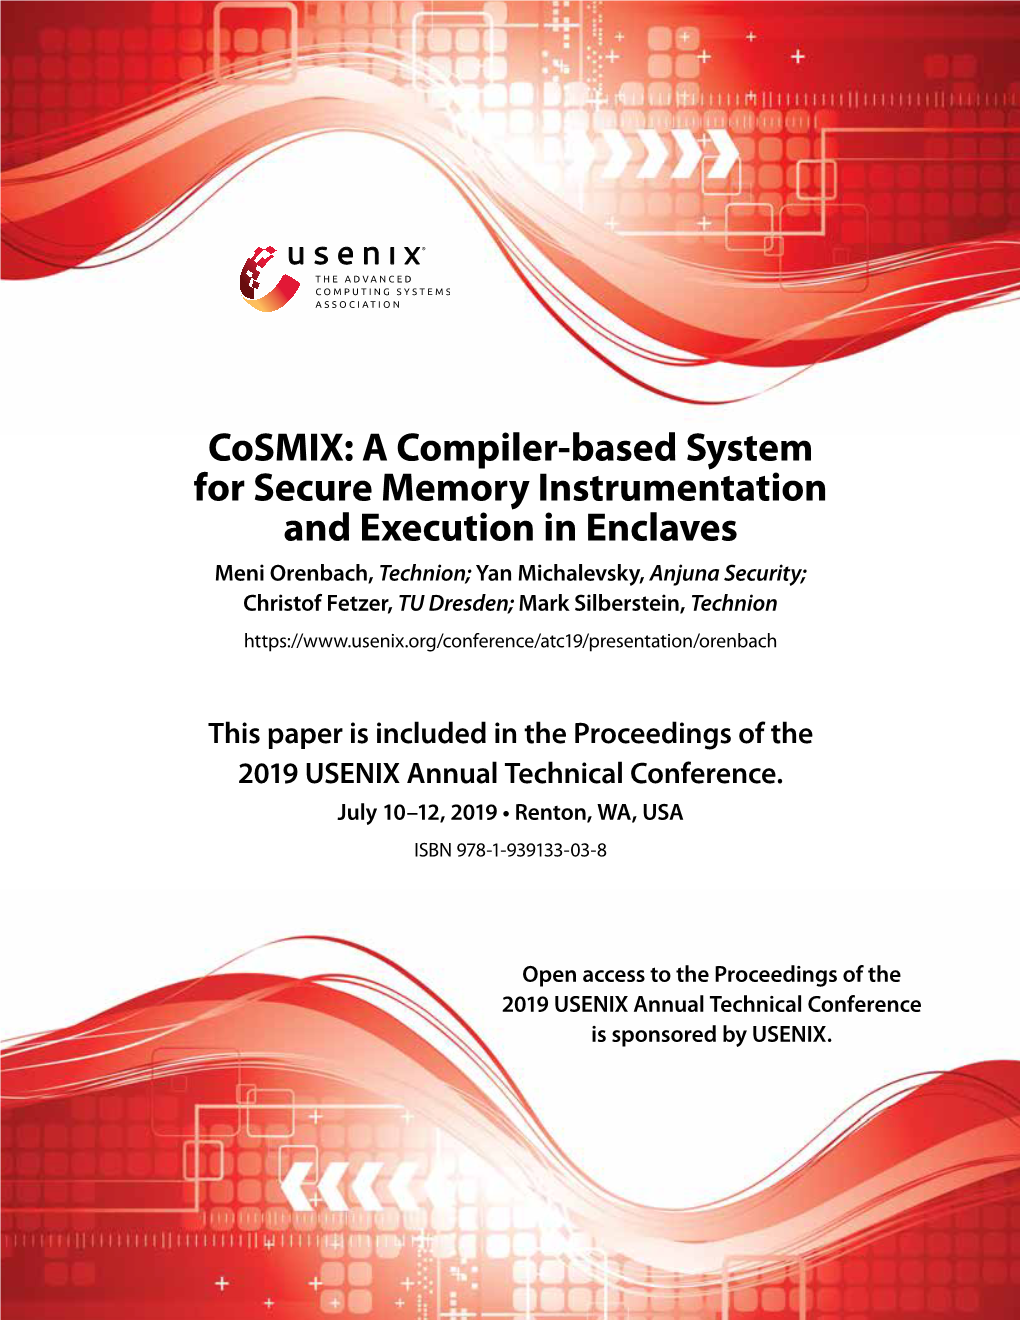 Cosmix: a Compiler-Based System for Secure Memory Instrumentation